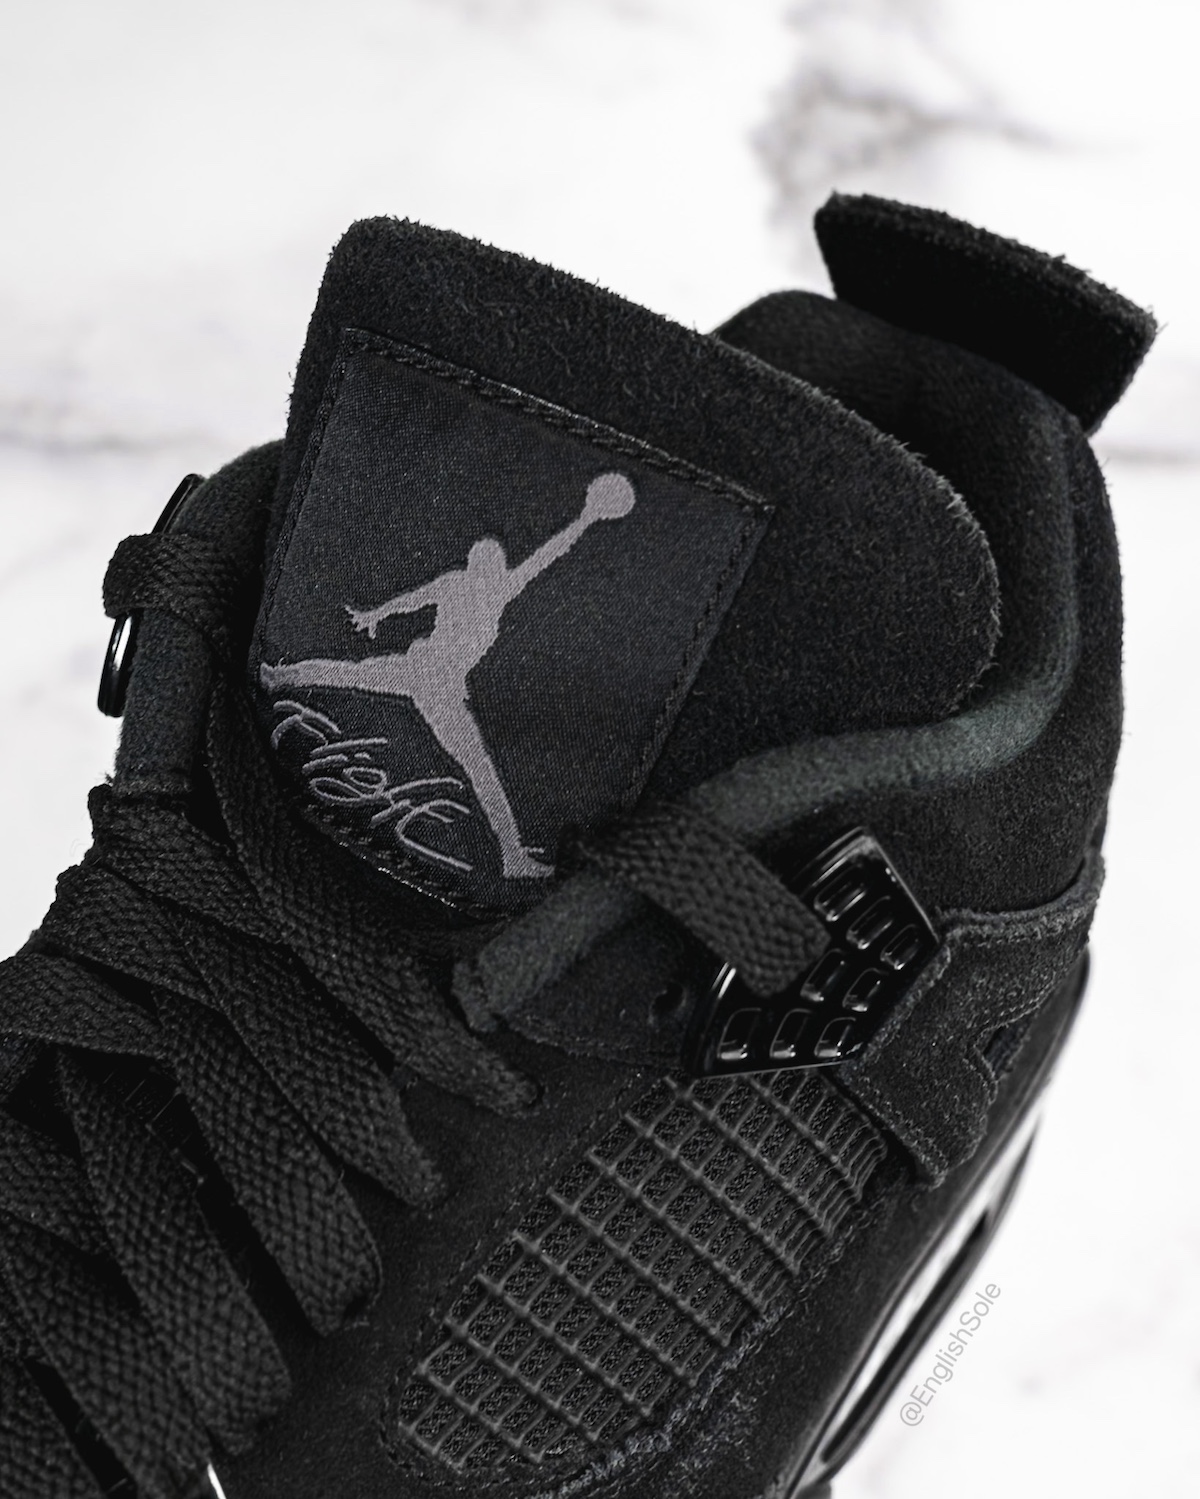 Nike SB Air Jordan 4 Black Cat Wear Test Sample 6